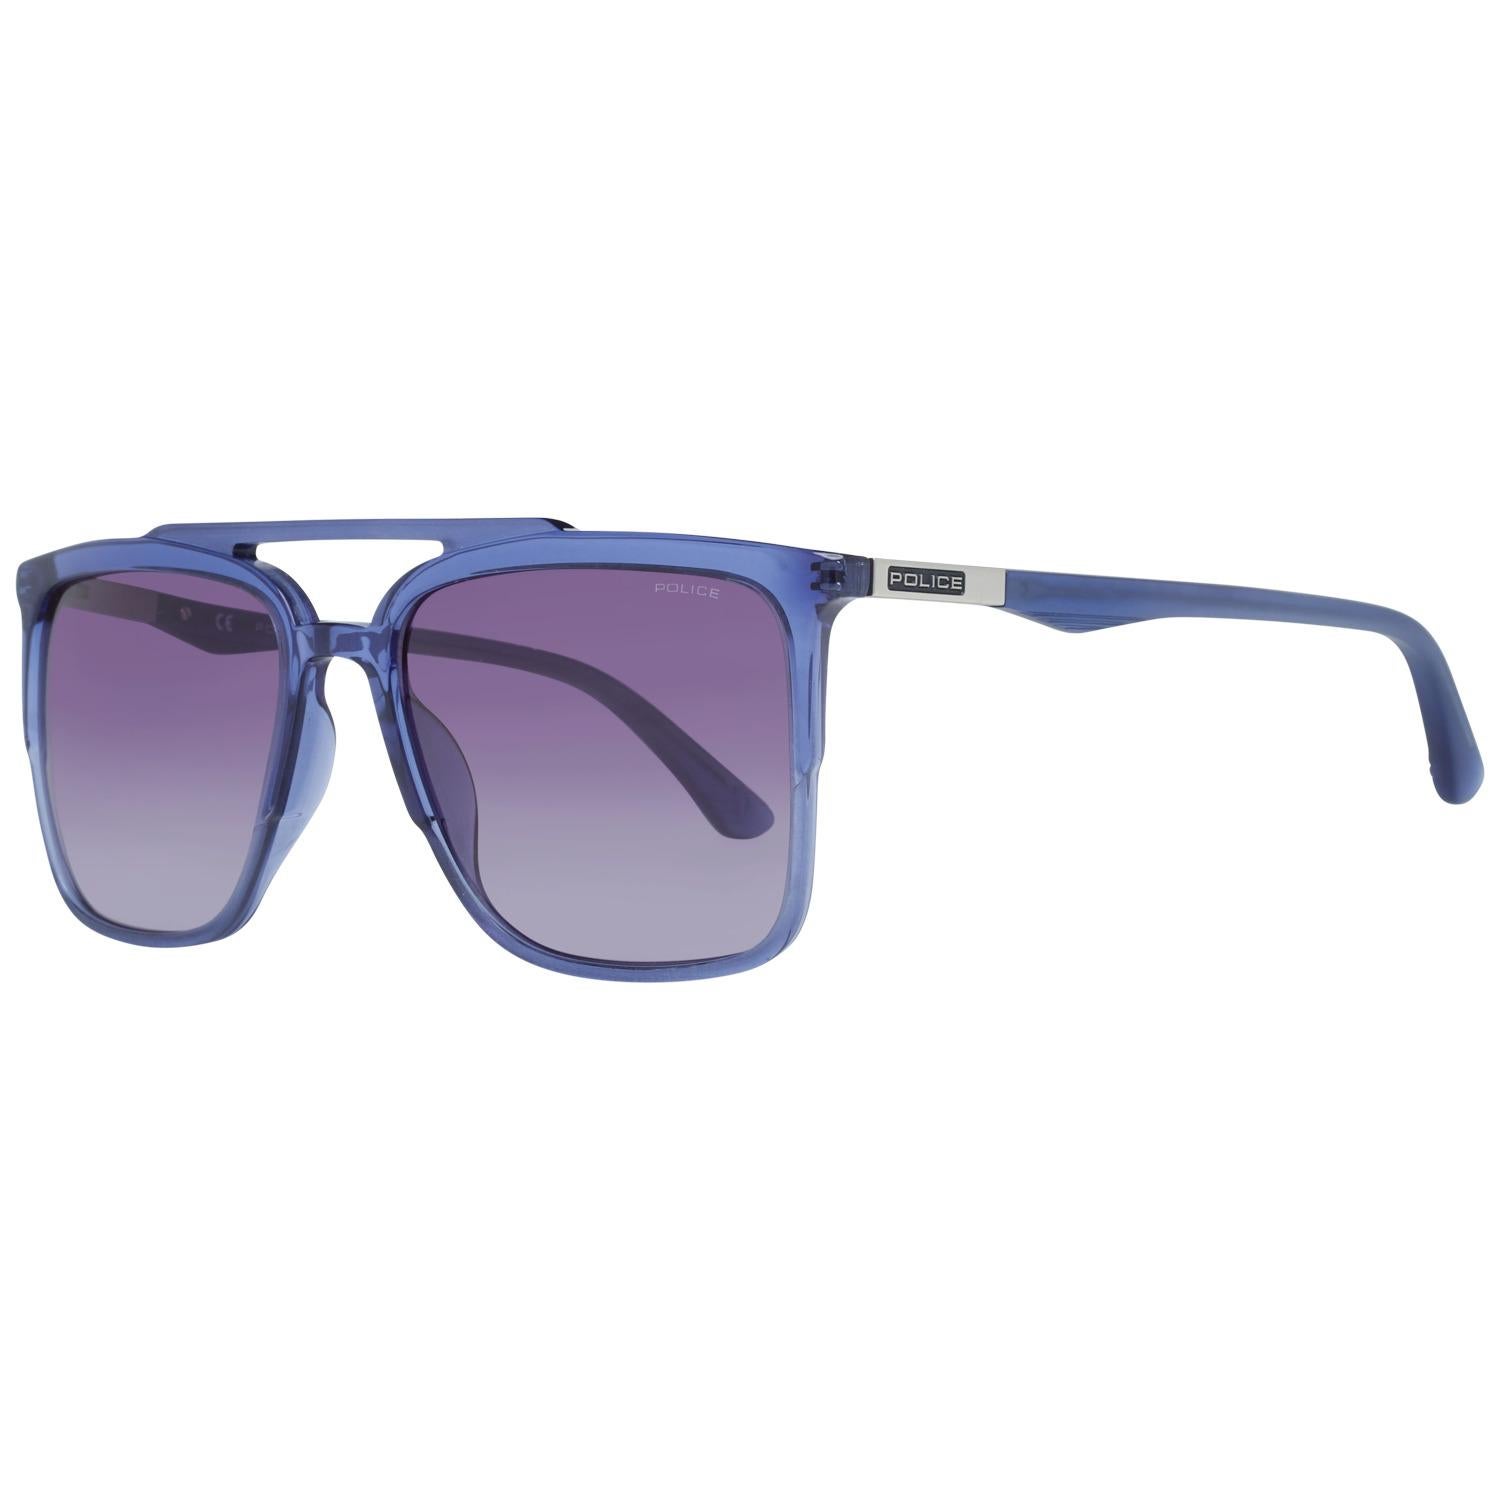 Police Mint Unisex Blue Sunglasses SPL363 560955 56-18-145 mm 1